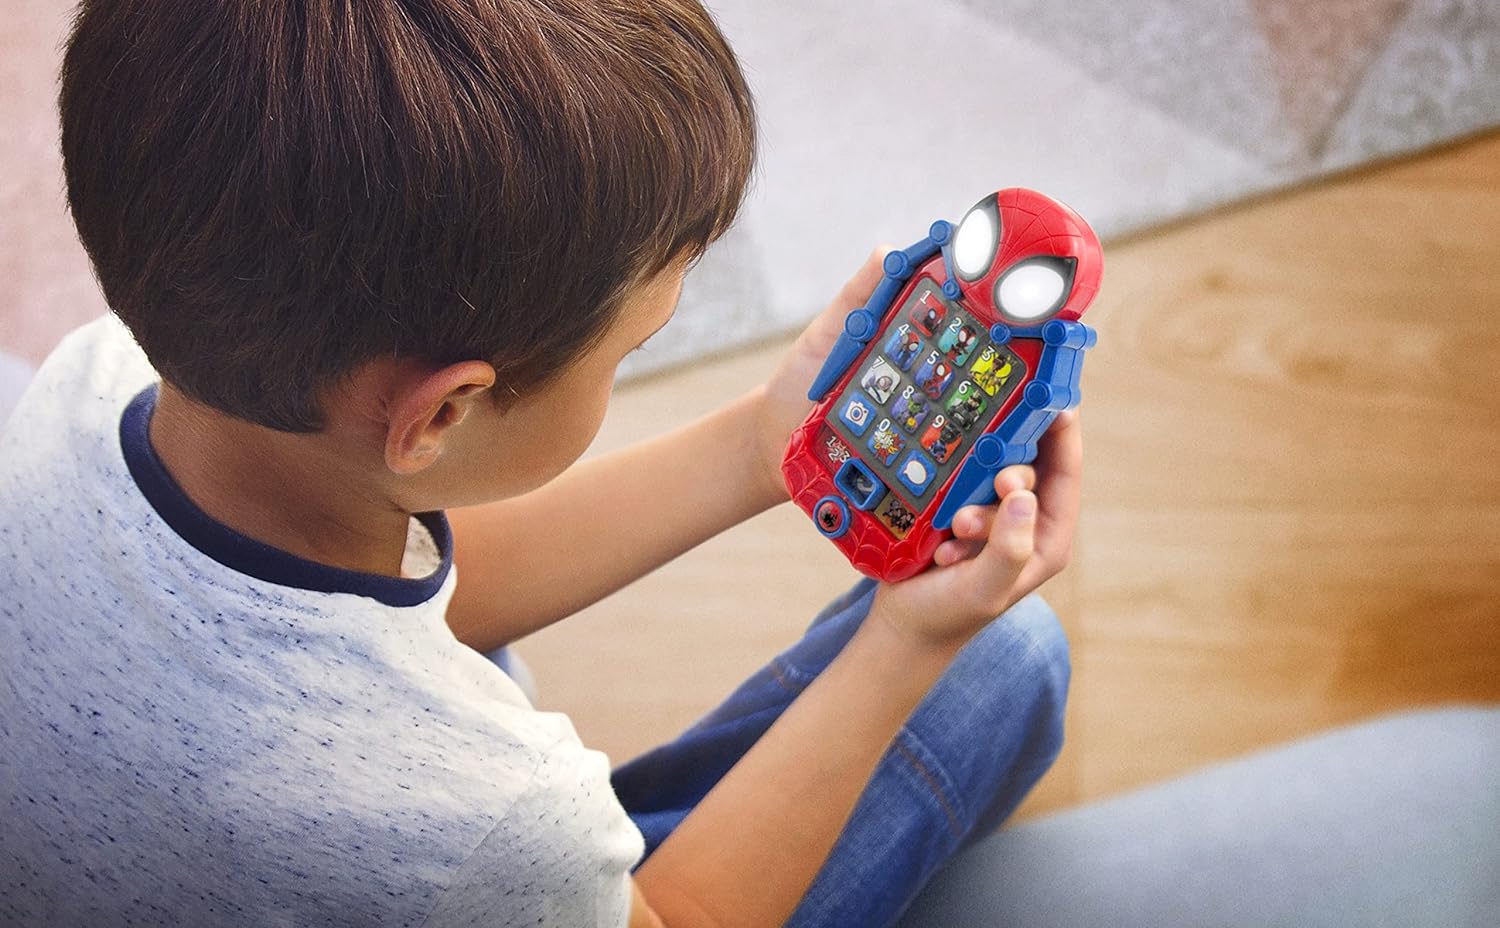 eKids Spidey and His Amazing Friends لعبة هاتف للأطفال الصغار مع ألعاب تعليمية مدمجة لمرحلة ما قبل المدرسة، ألعاب تعليمية للأنشطة واللعب التظاهري، لمحبي هدايا سبايدر مان